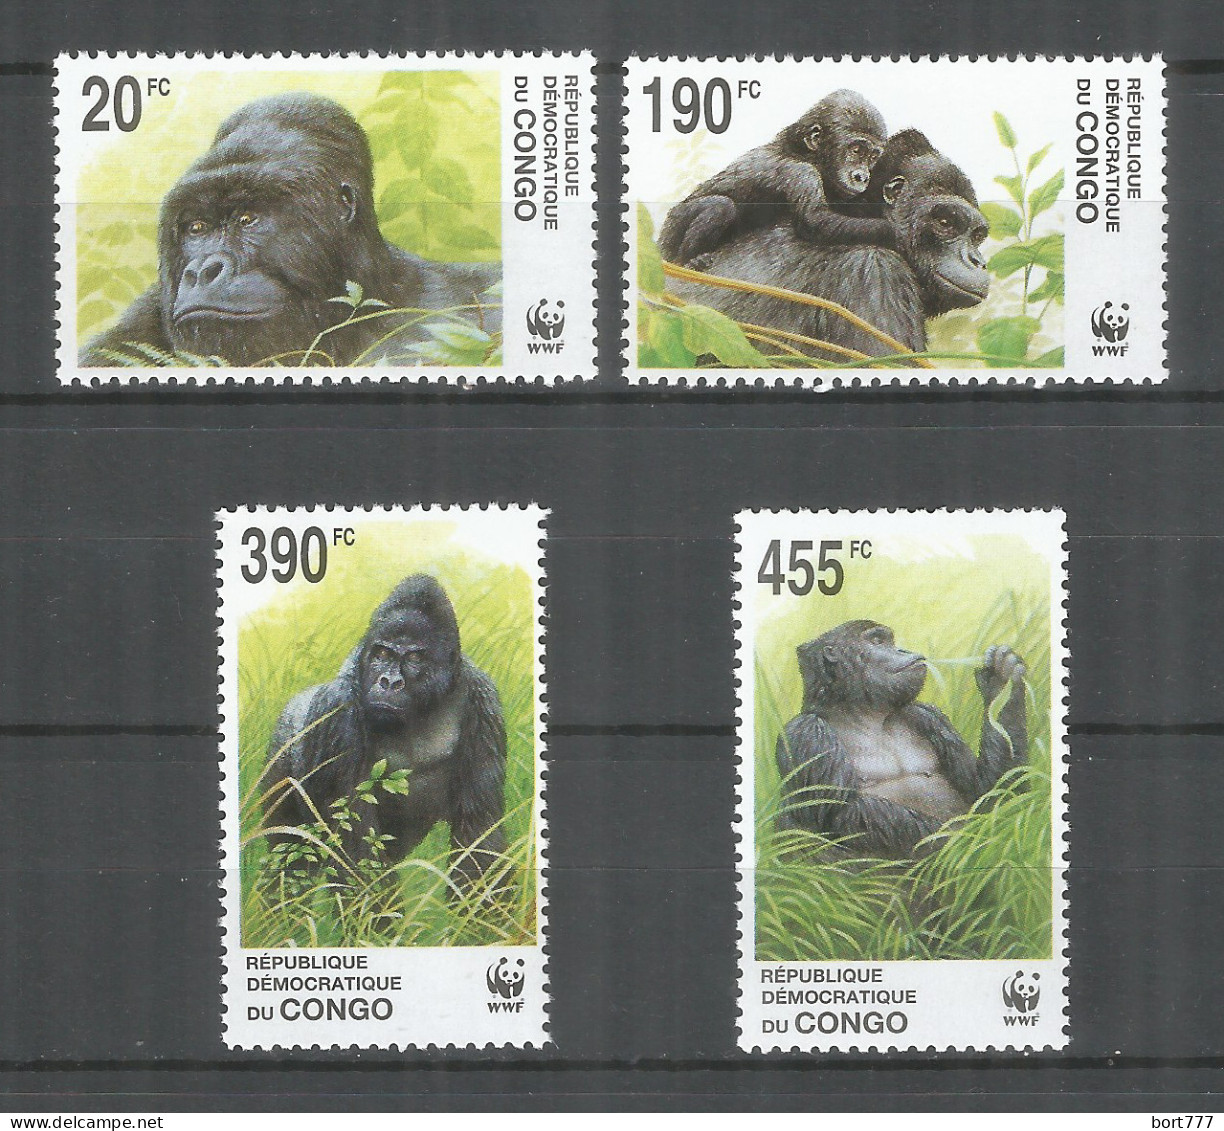 Congo 2002 Year Mint Stamps MNH(**) Monkey WWF - Mint/hinged